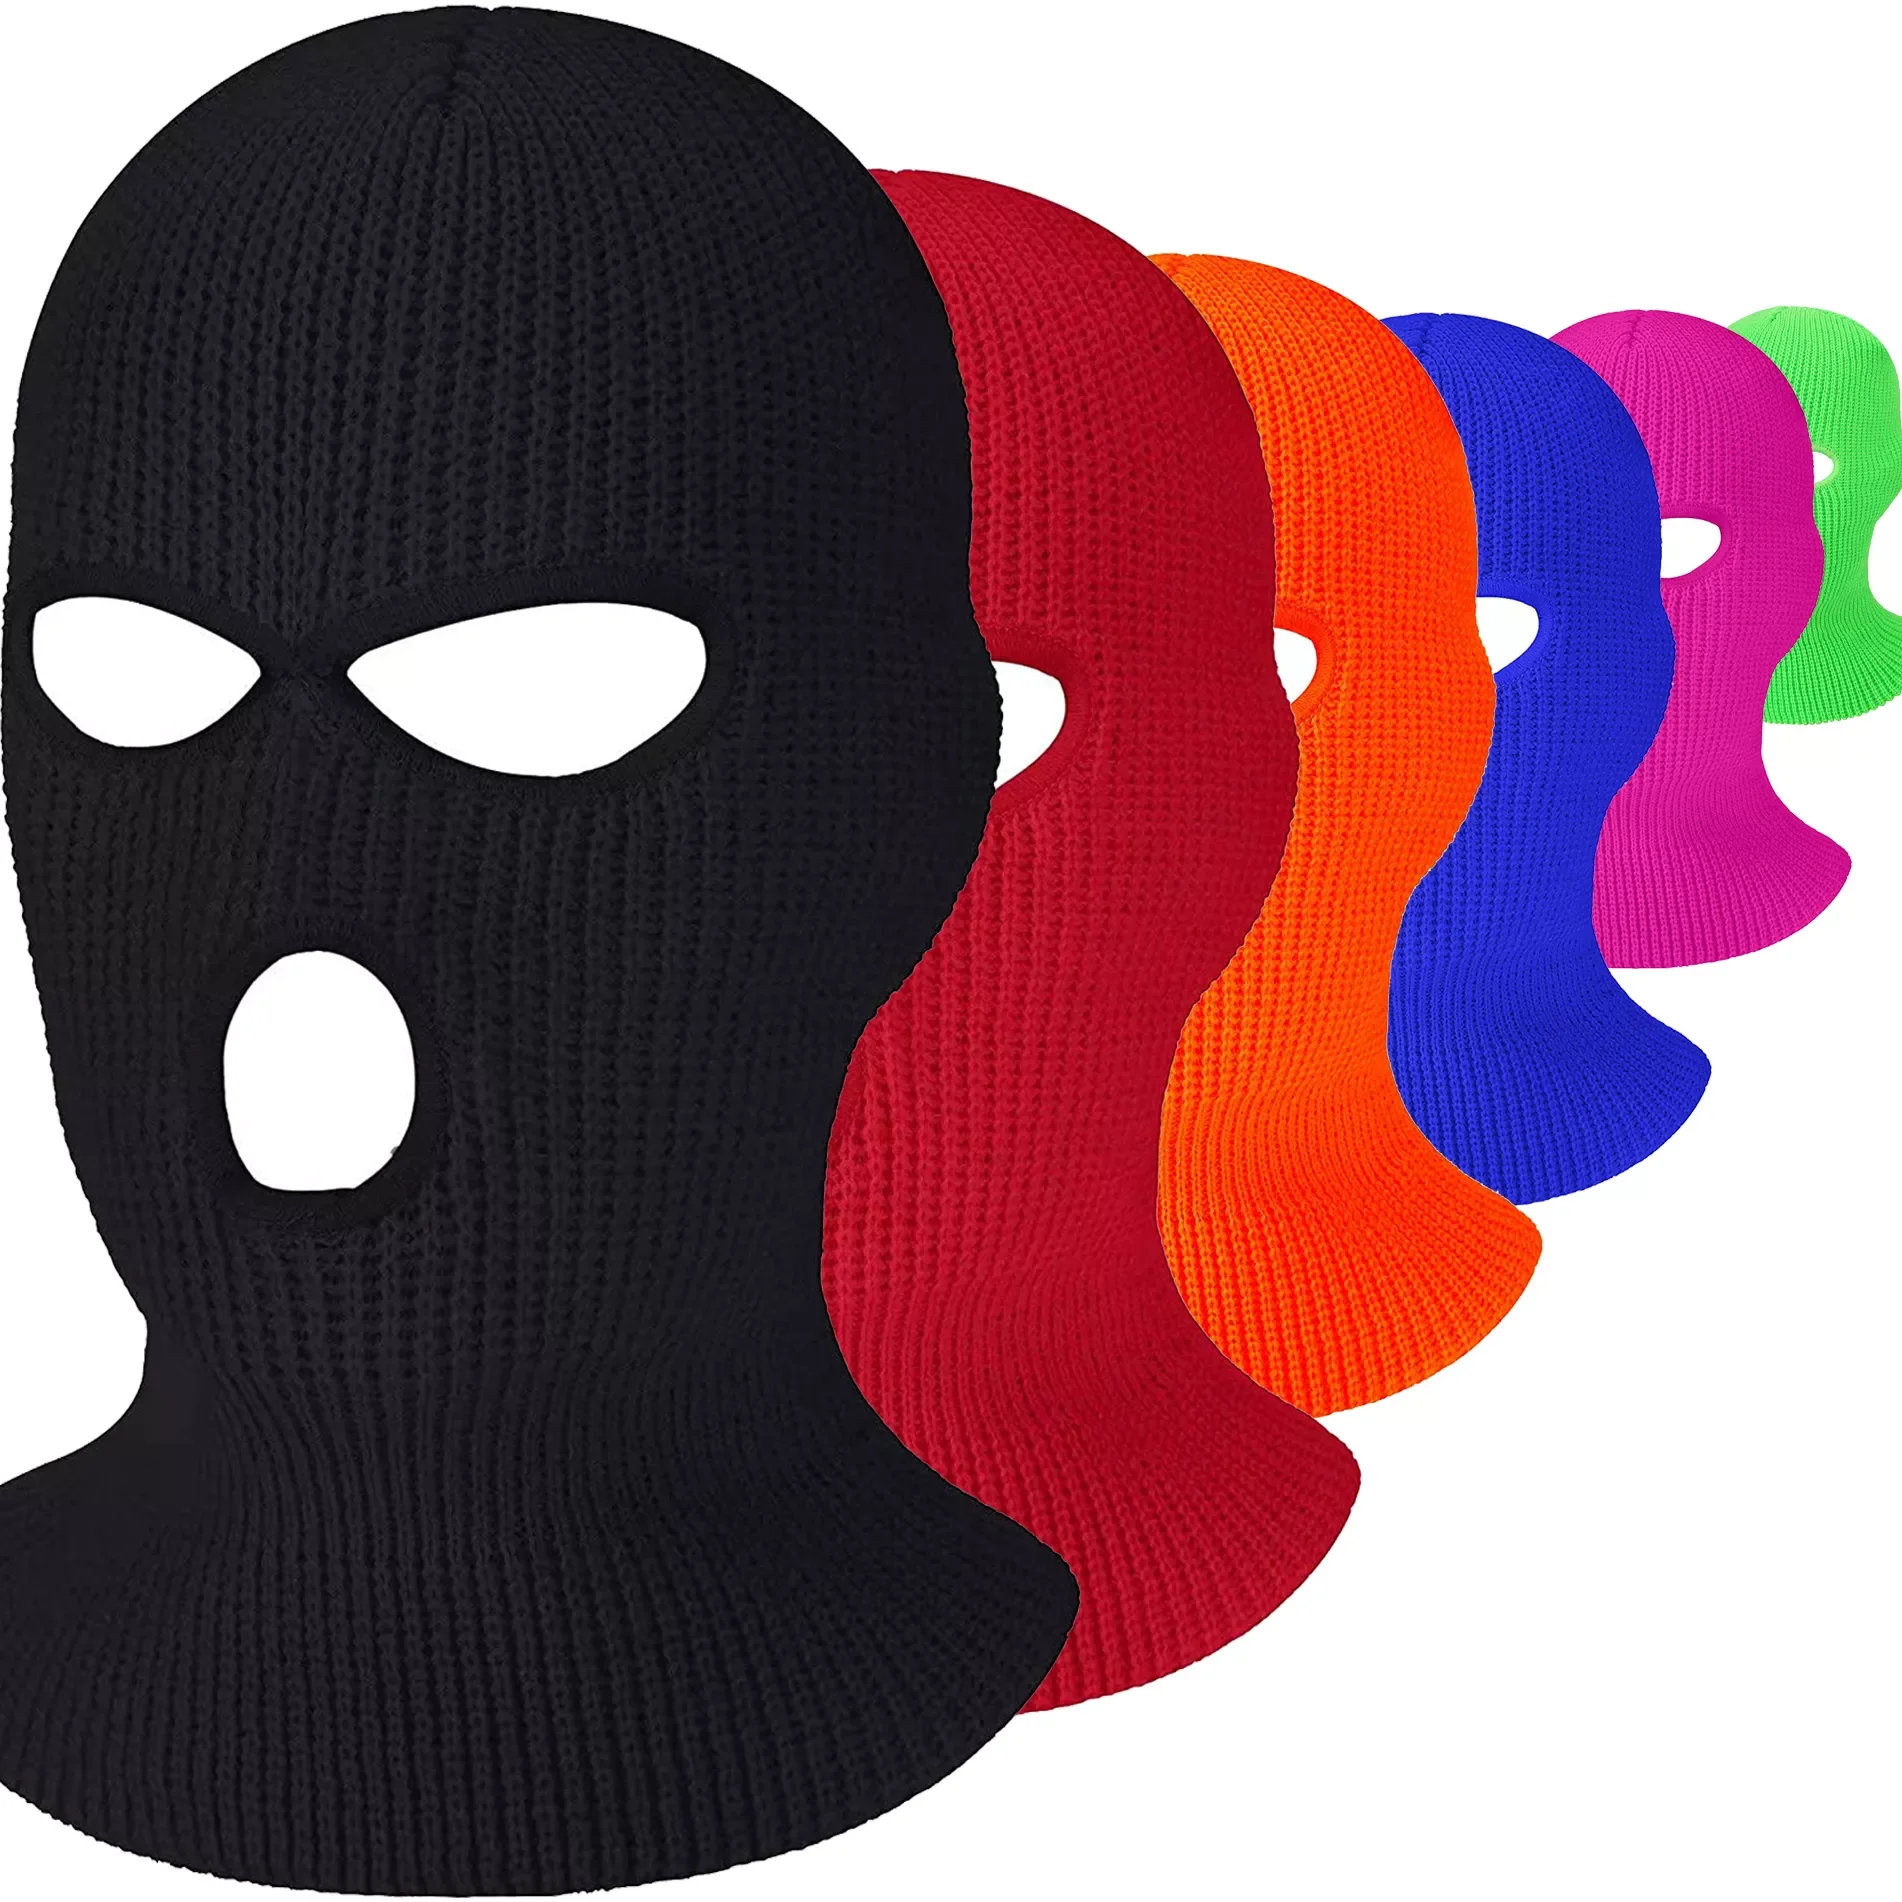 New in Holes Full Face Mask Skullies Winter Ski Sports Balaclava Masks Head Cover Knitted Ski Beanies Men Women Hat Cap Headwear